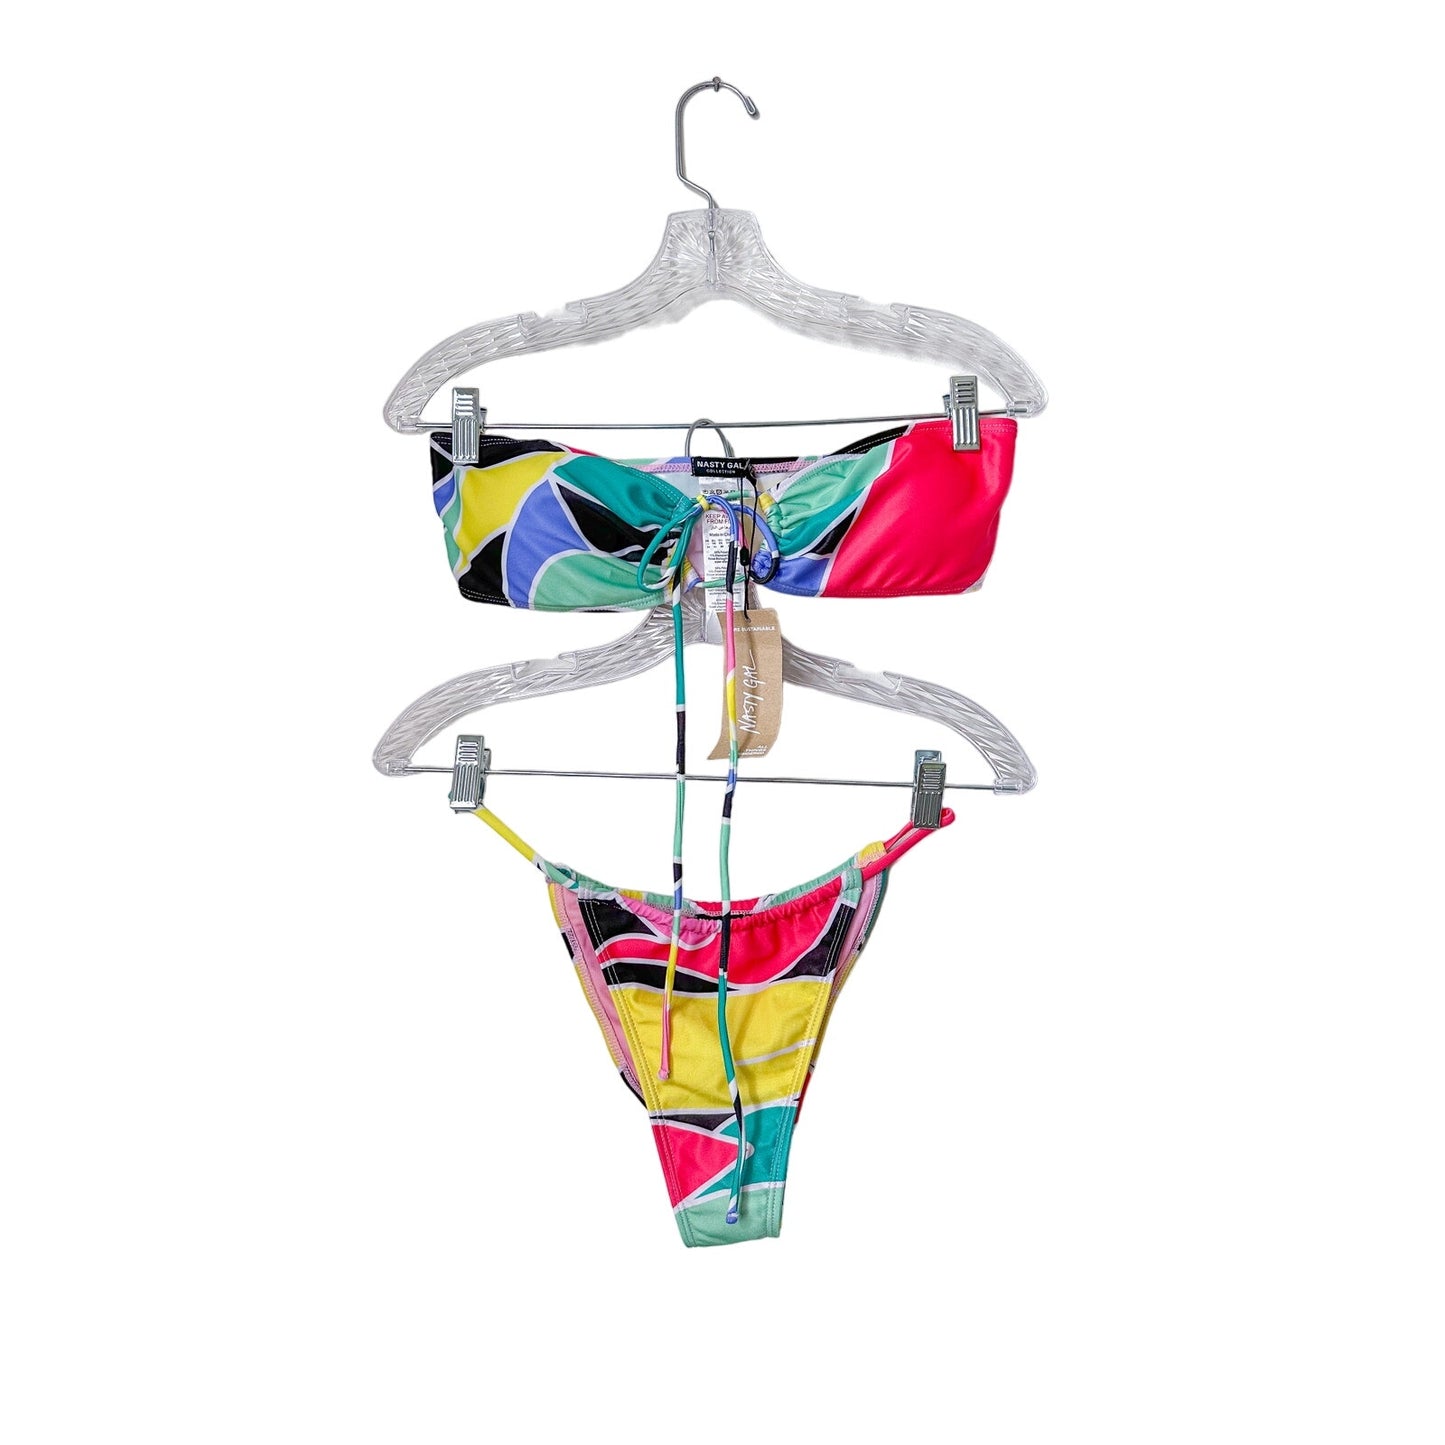 NWT Nasty Gal Abstract Swim Bikini Set, Size 10